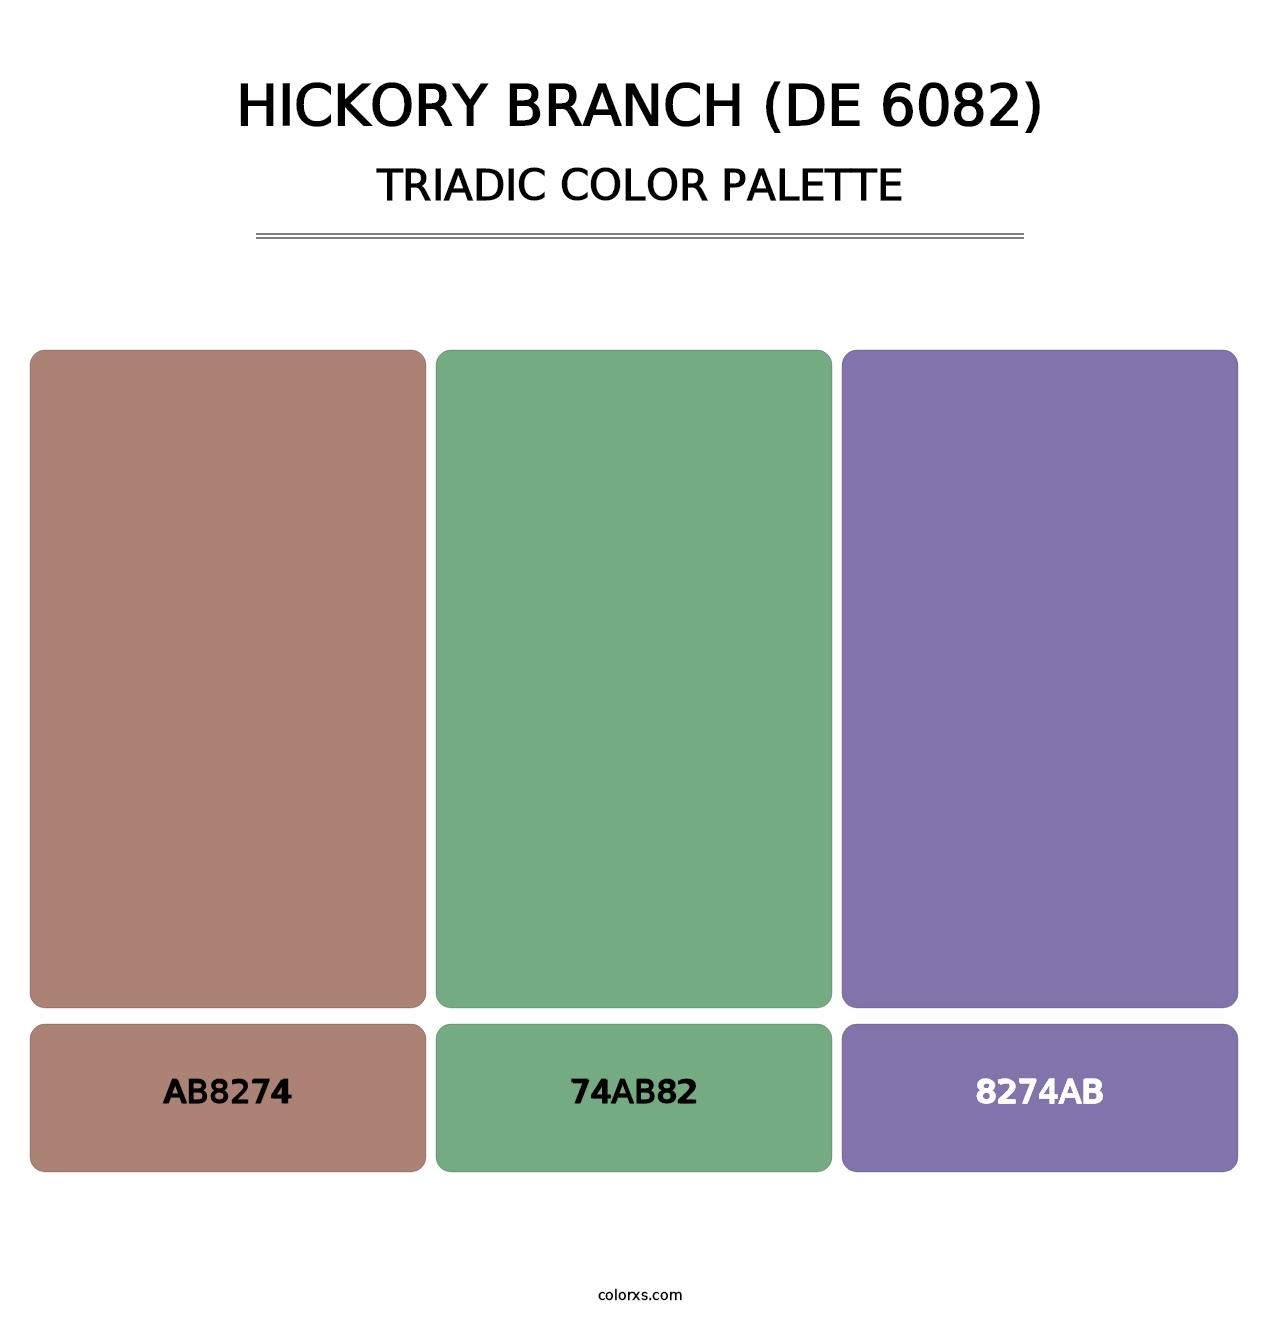 Hickory Branch (DE 6082) - Triadic Color Palette